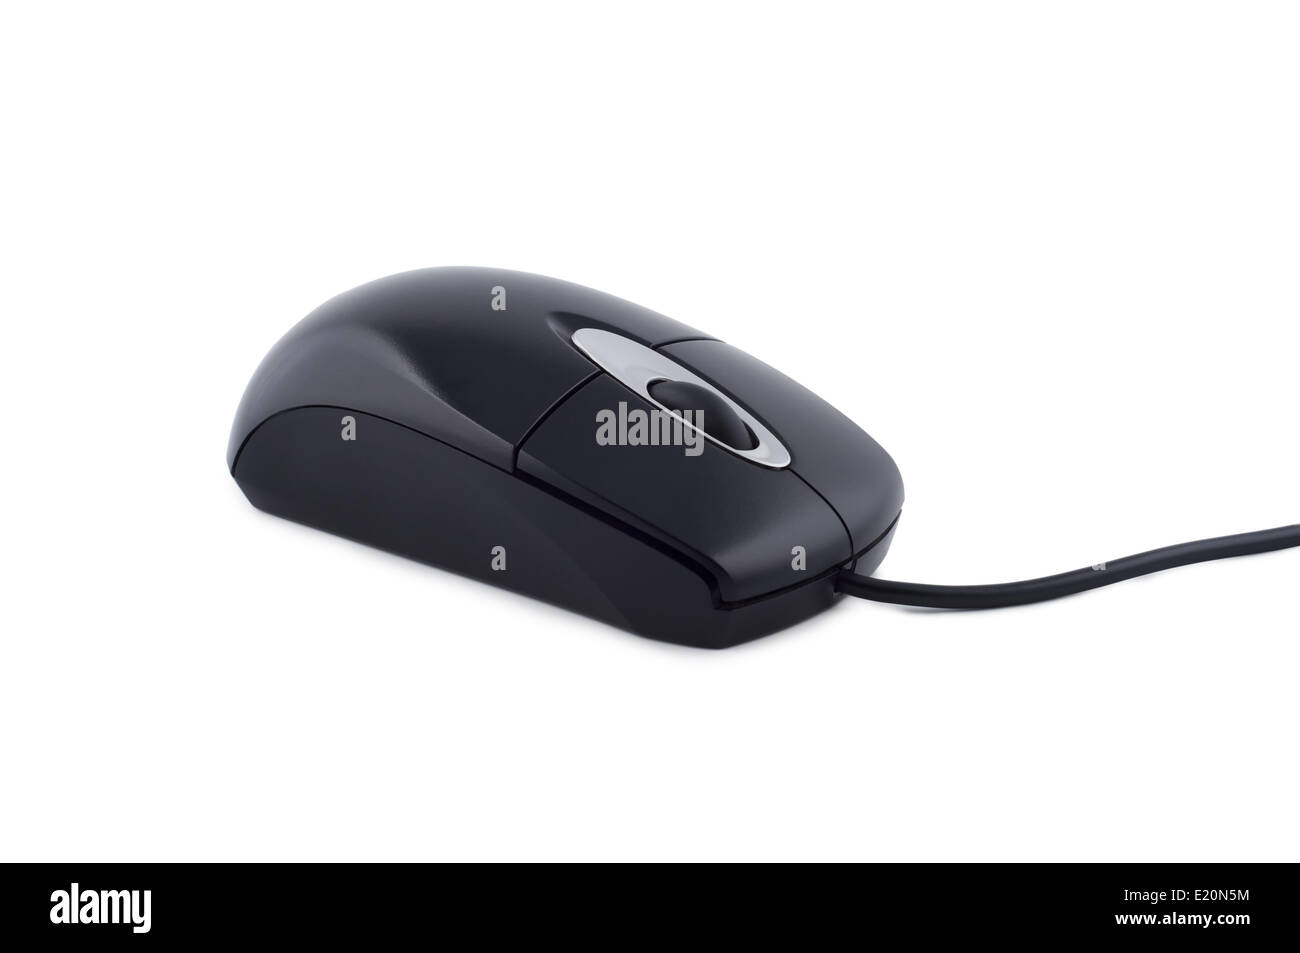 Computer Maus schwarze Farbe mit Draht. Stockfoto